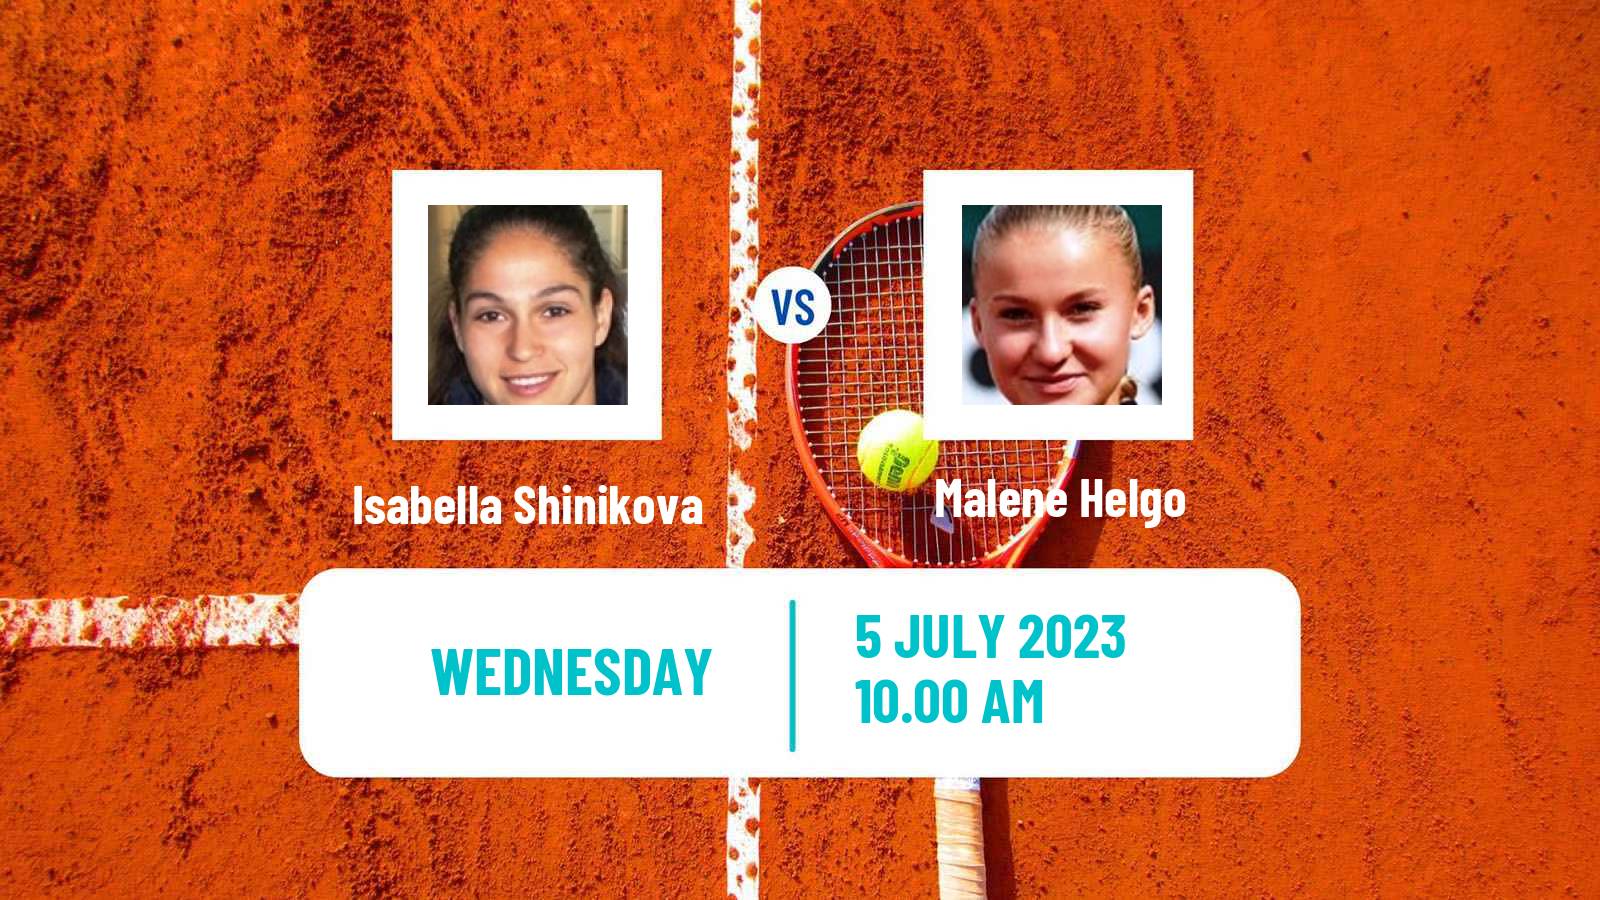 Tennis ITF W40 The Hague Women Isabella Shinikova - Malene Helgo